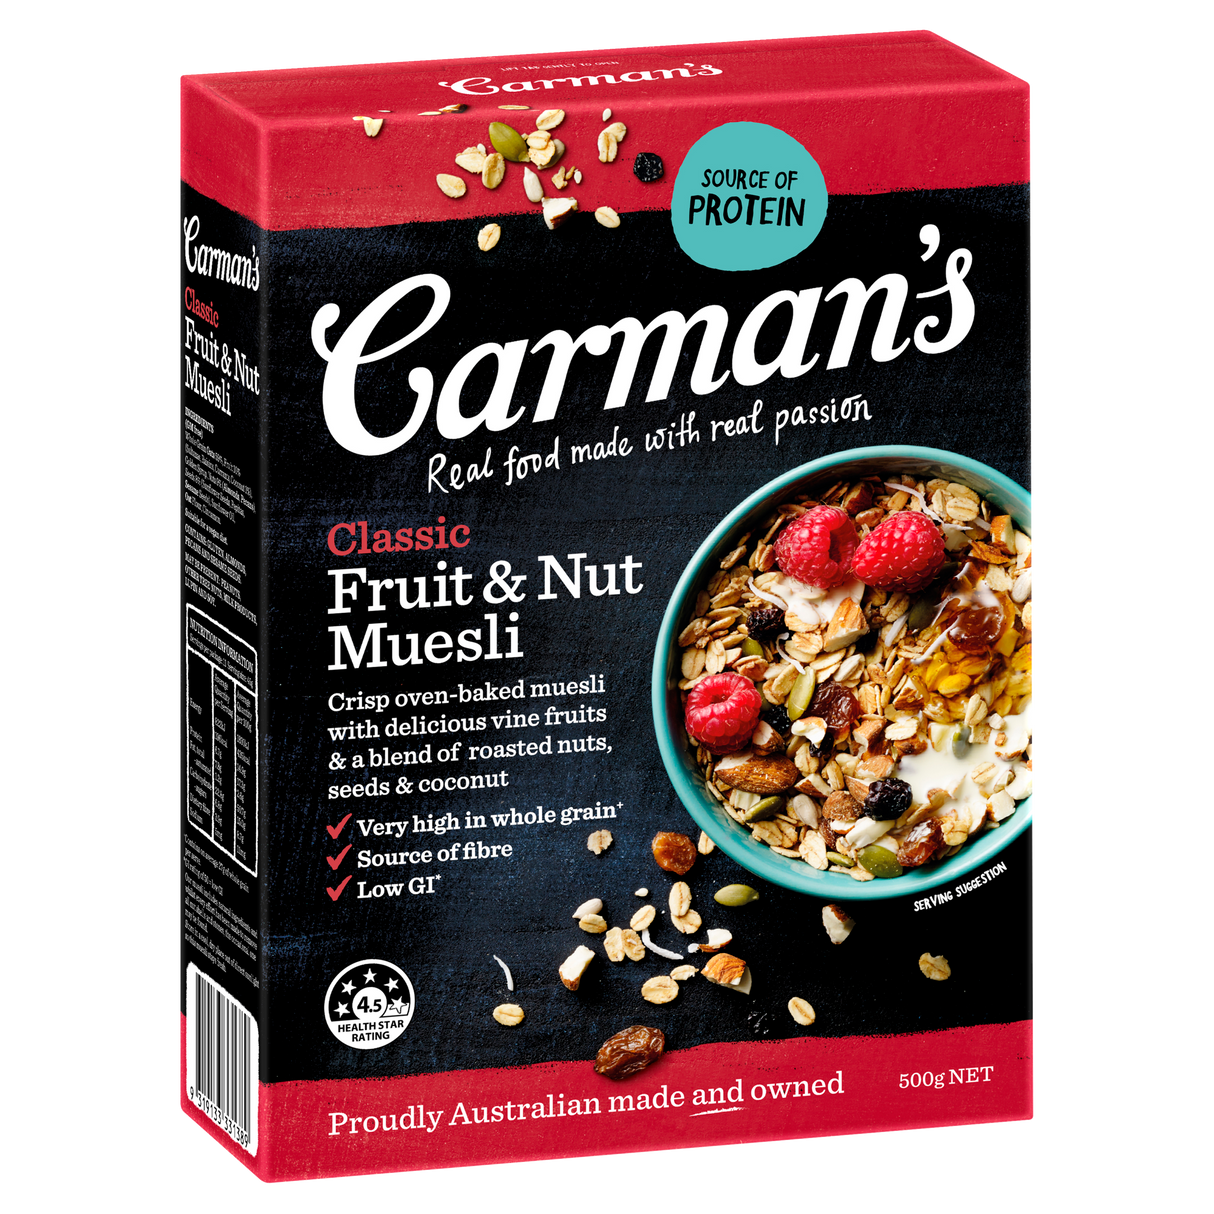 Carman's Classic Fruit & Nut Muesli 500g